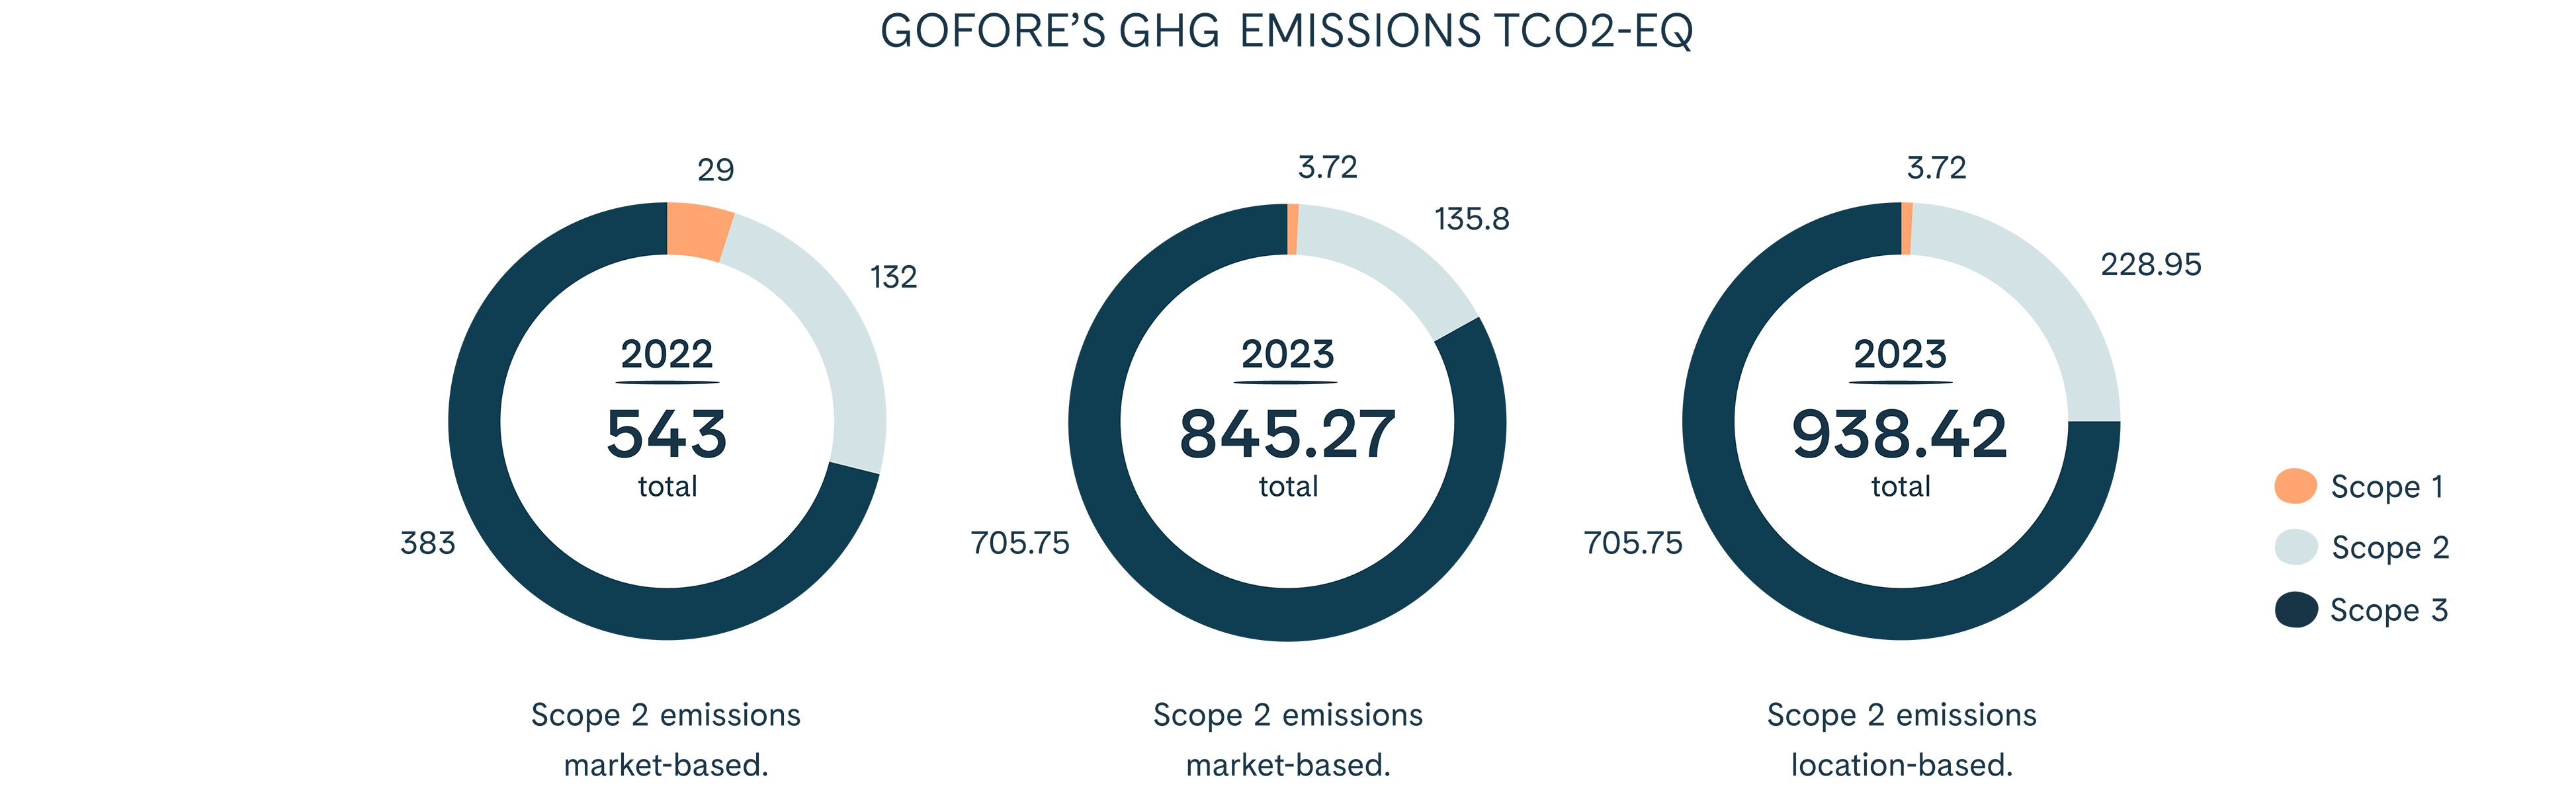 Gofore's GHG emissions TCO2-EQ